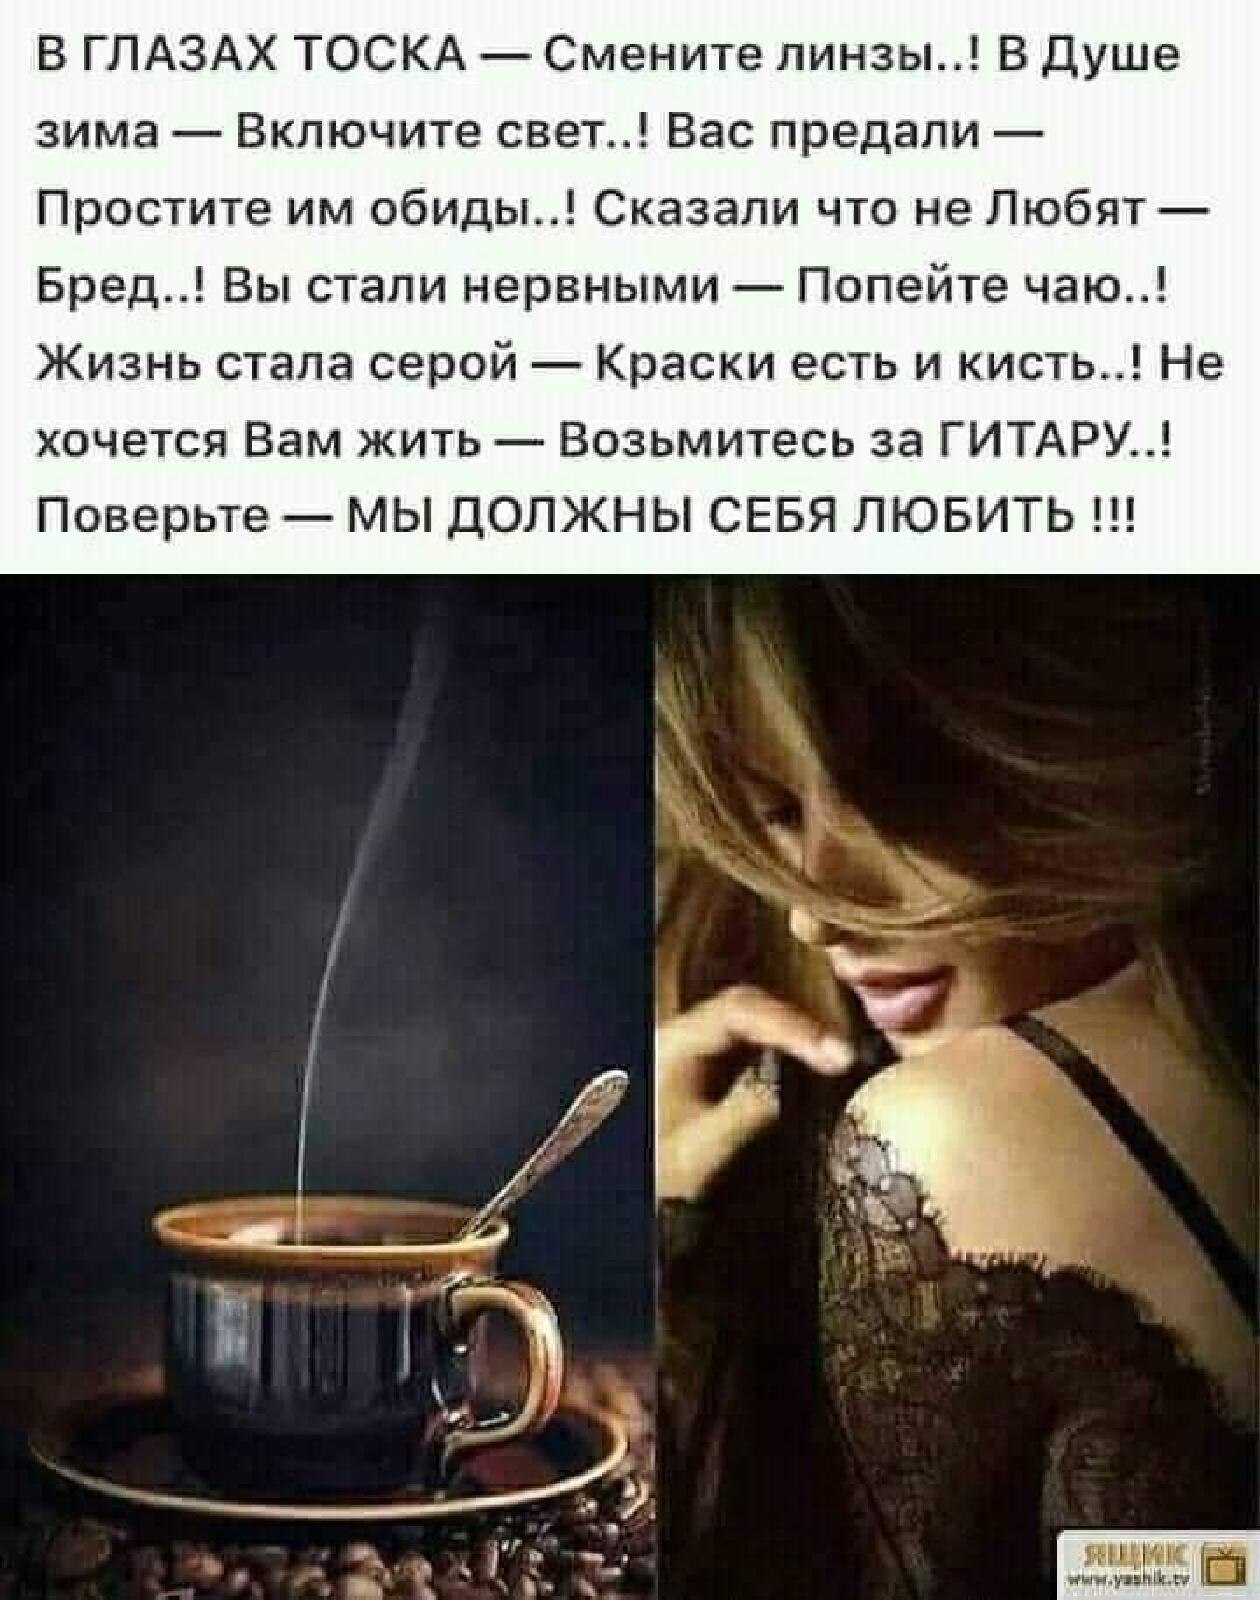 ***Victoria Viktorovna*** - 10  2024  13:32